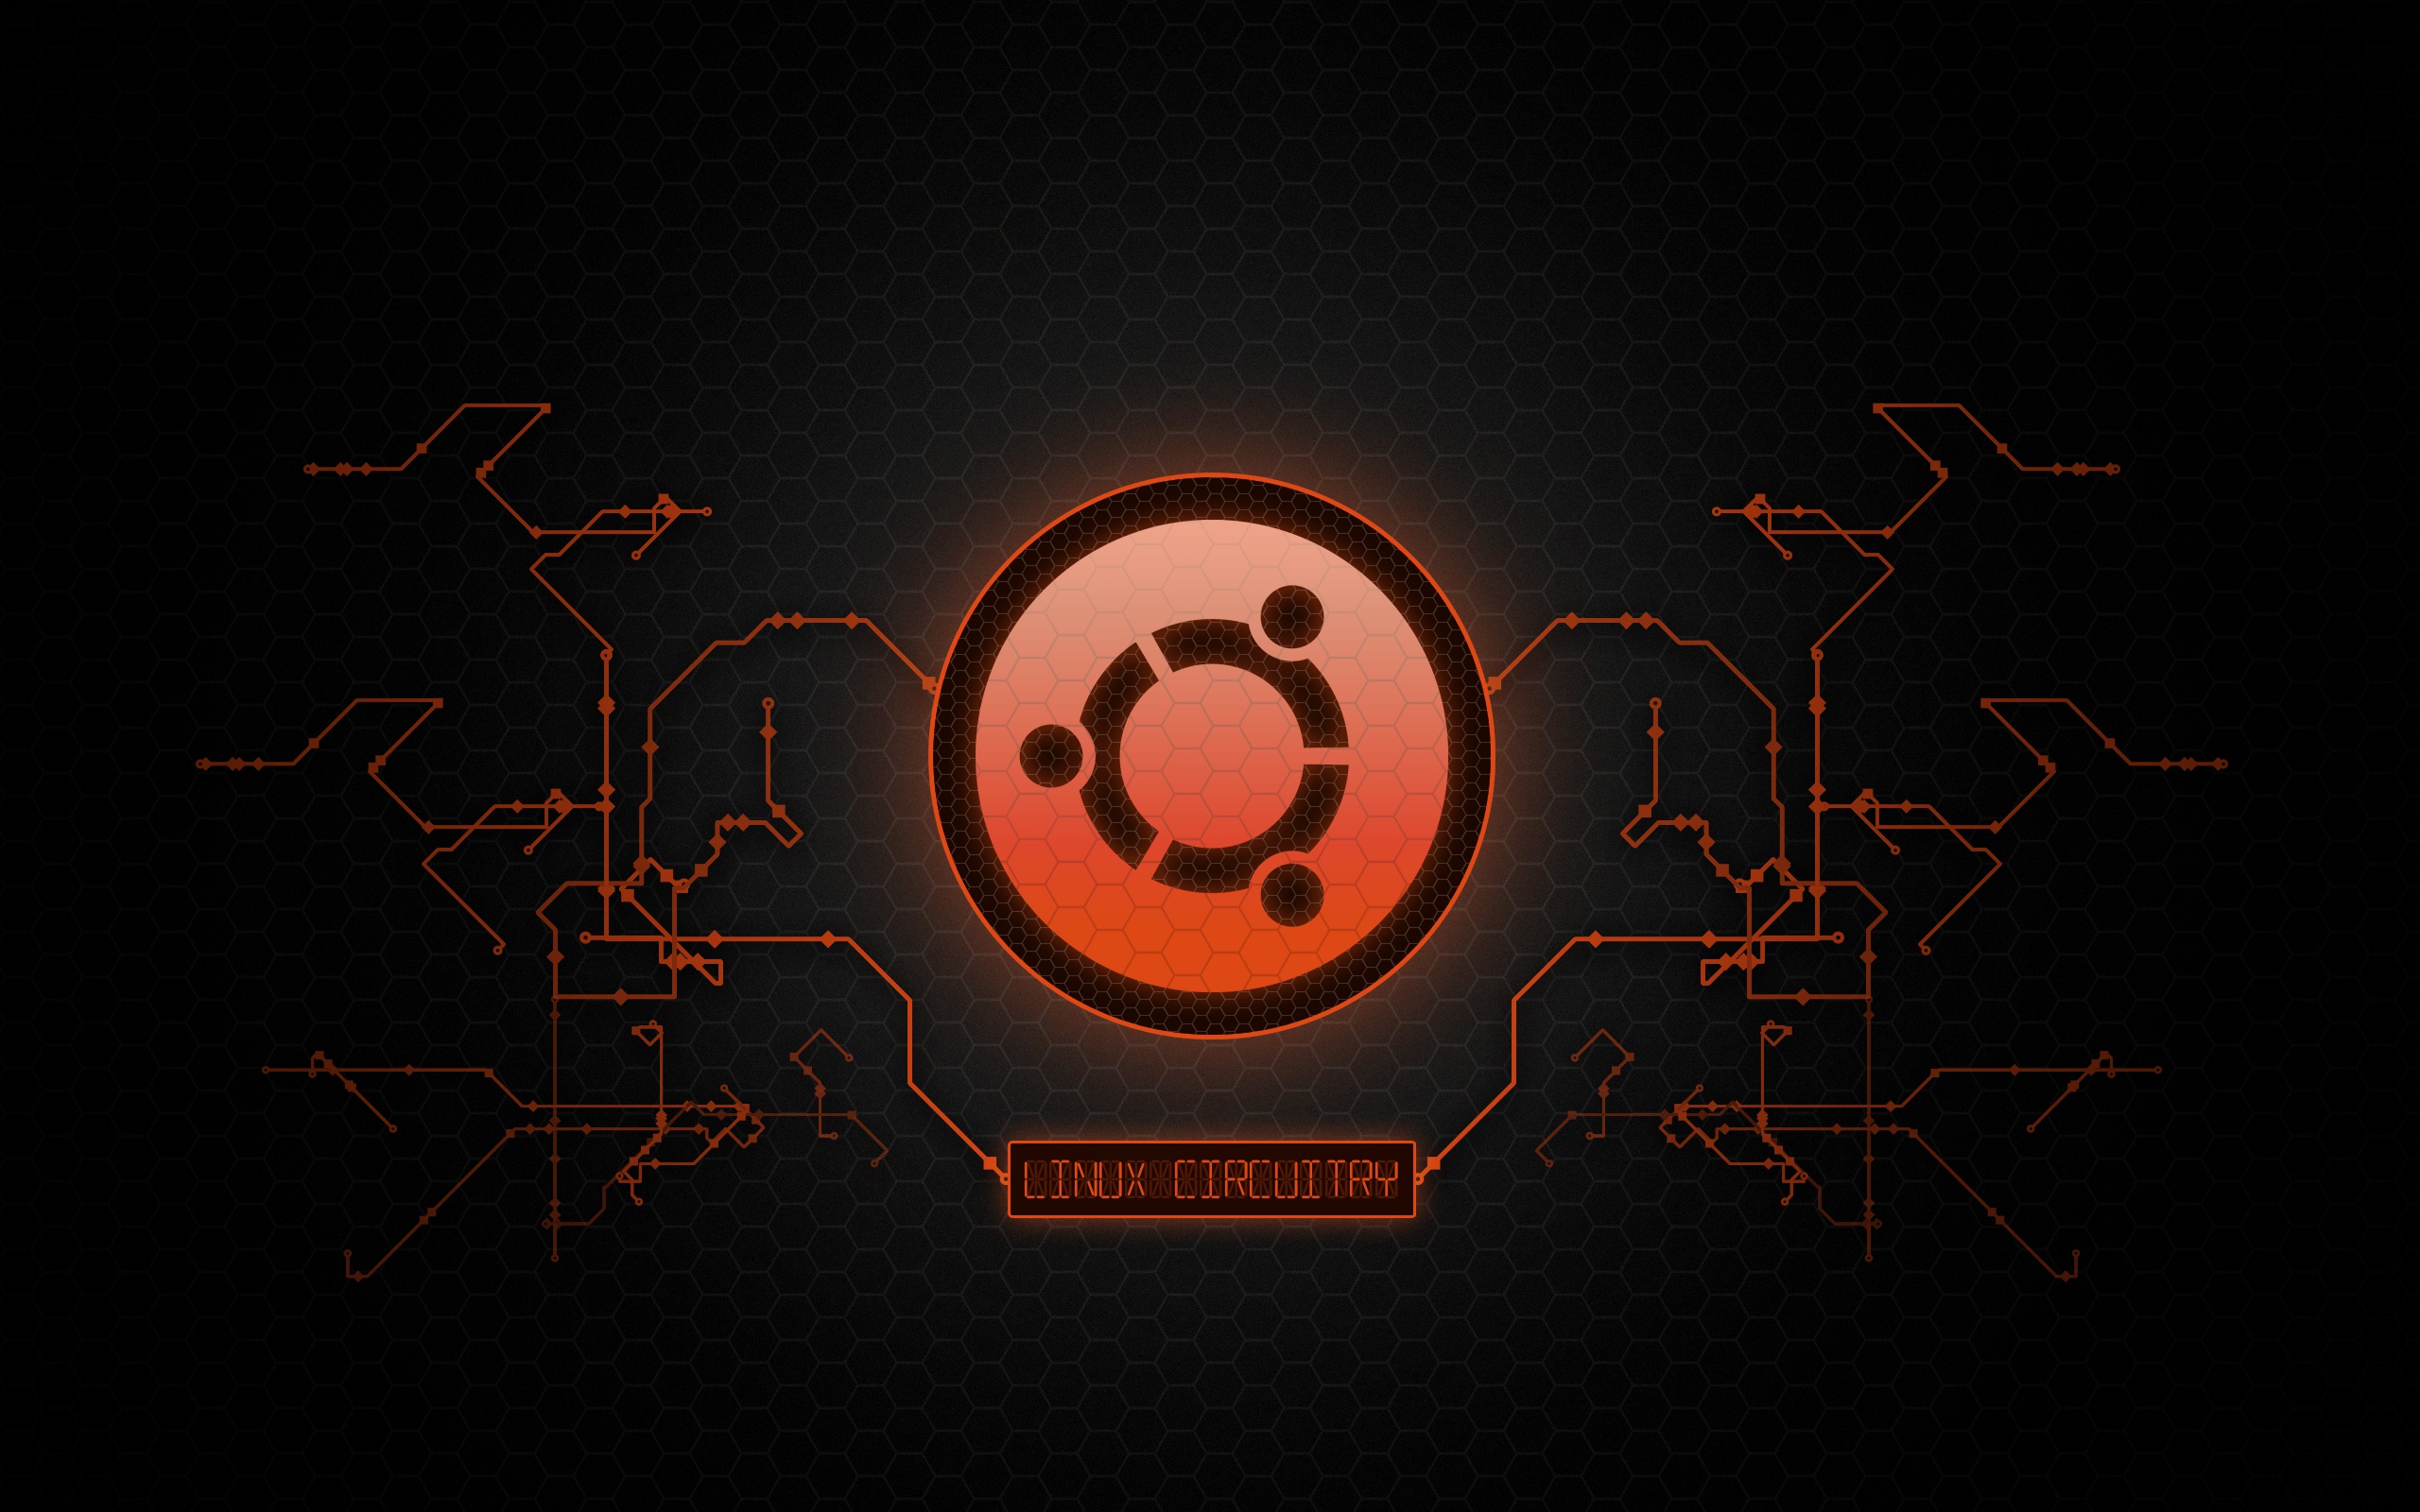 Technology Ubuntu HD Wallpaper | Background Image